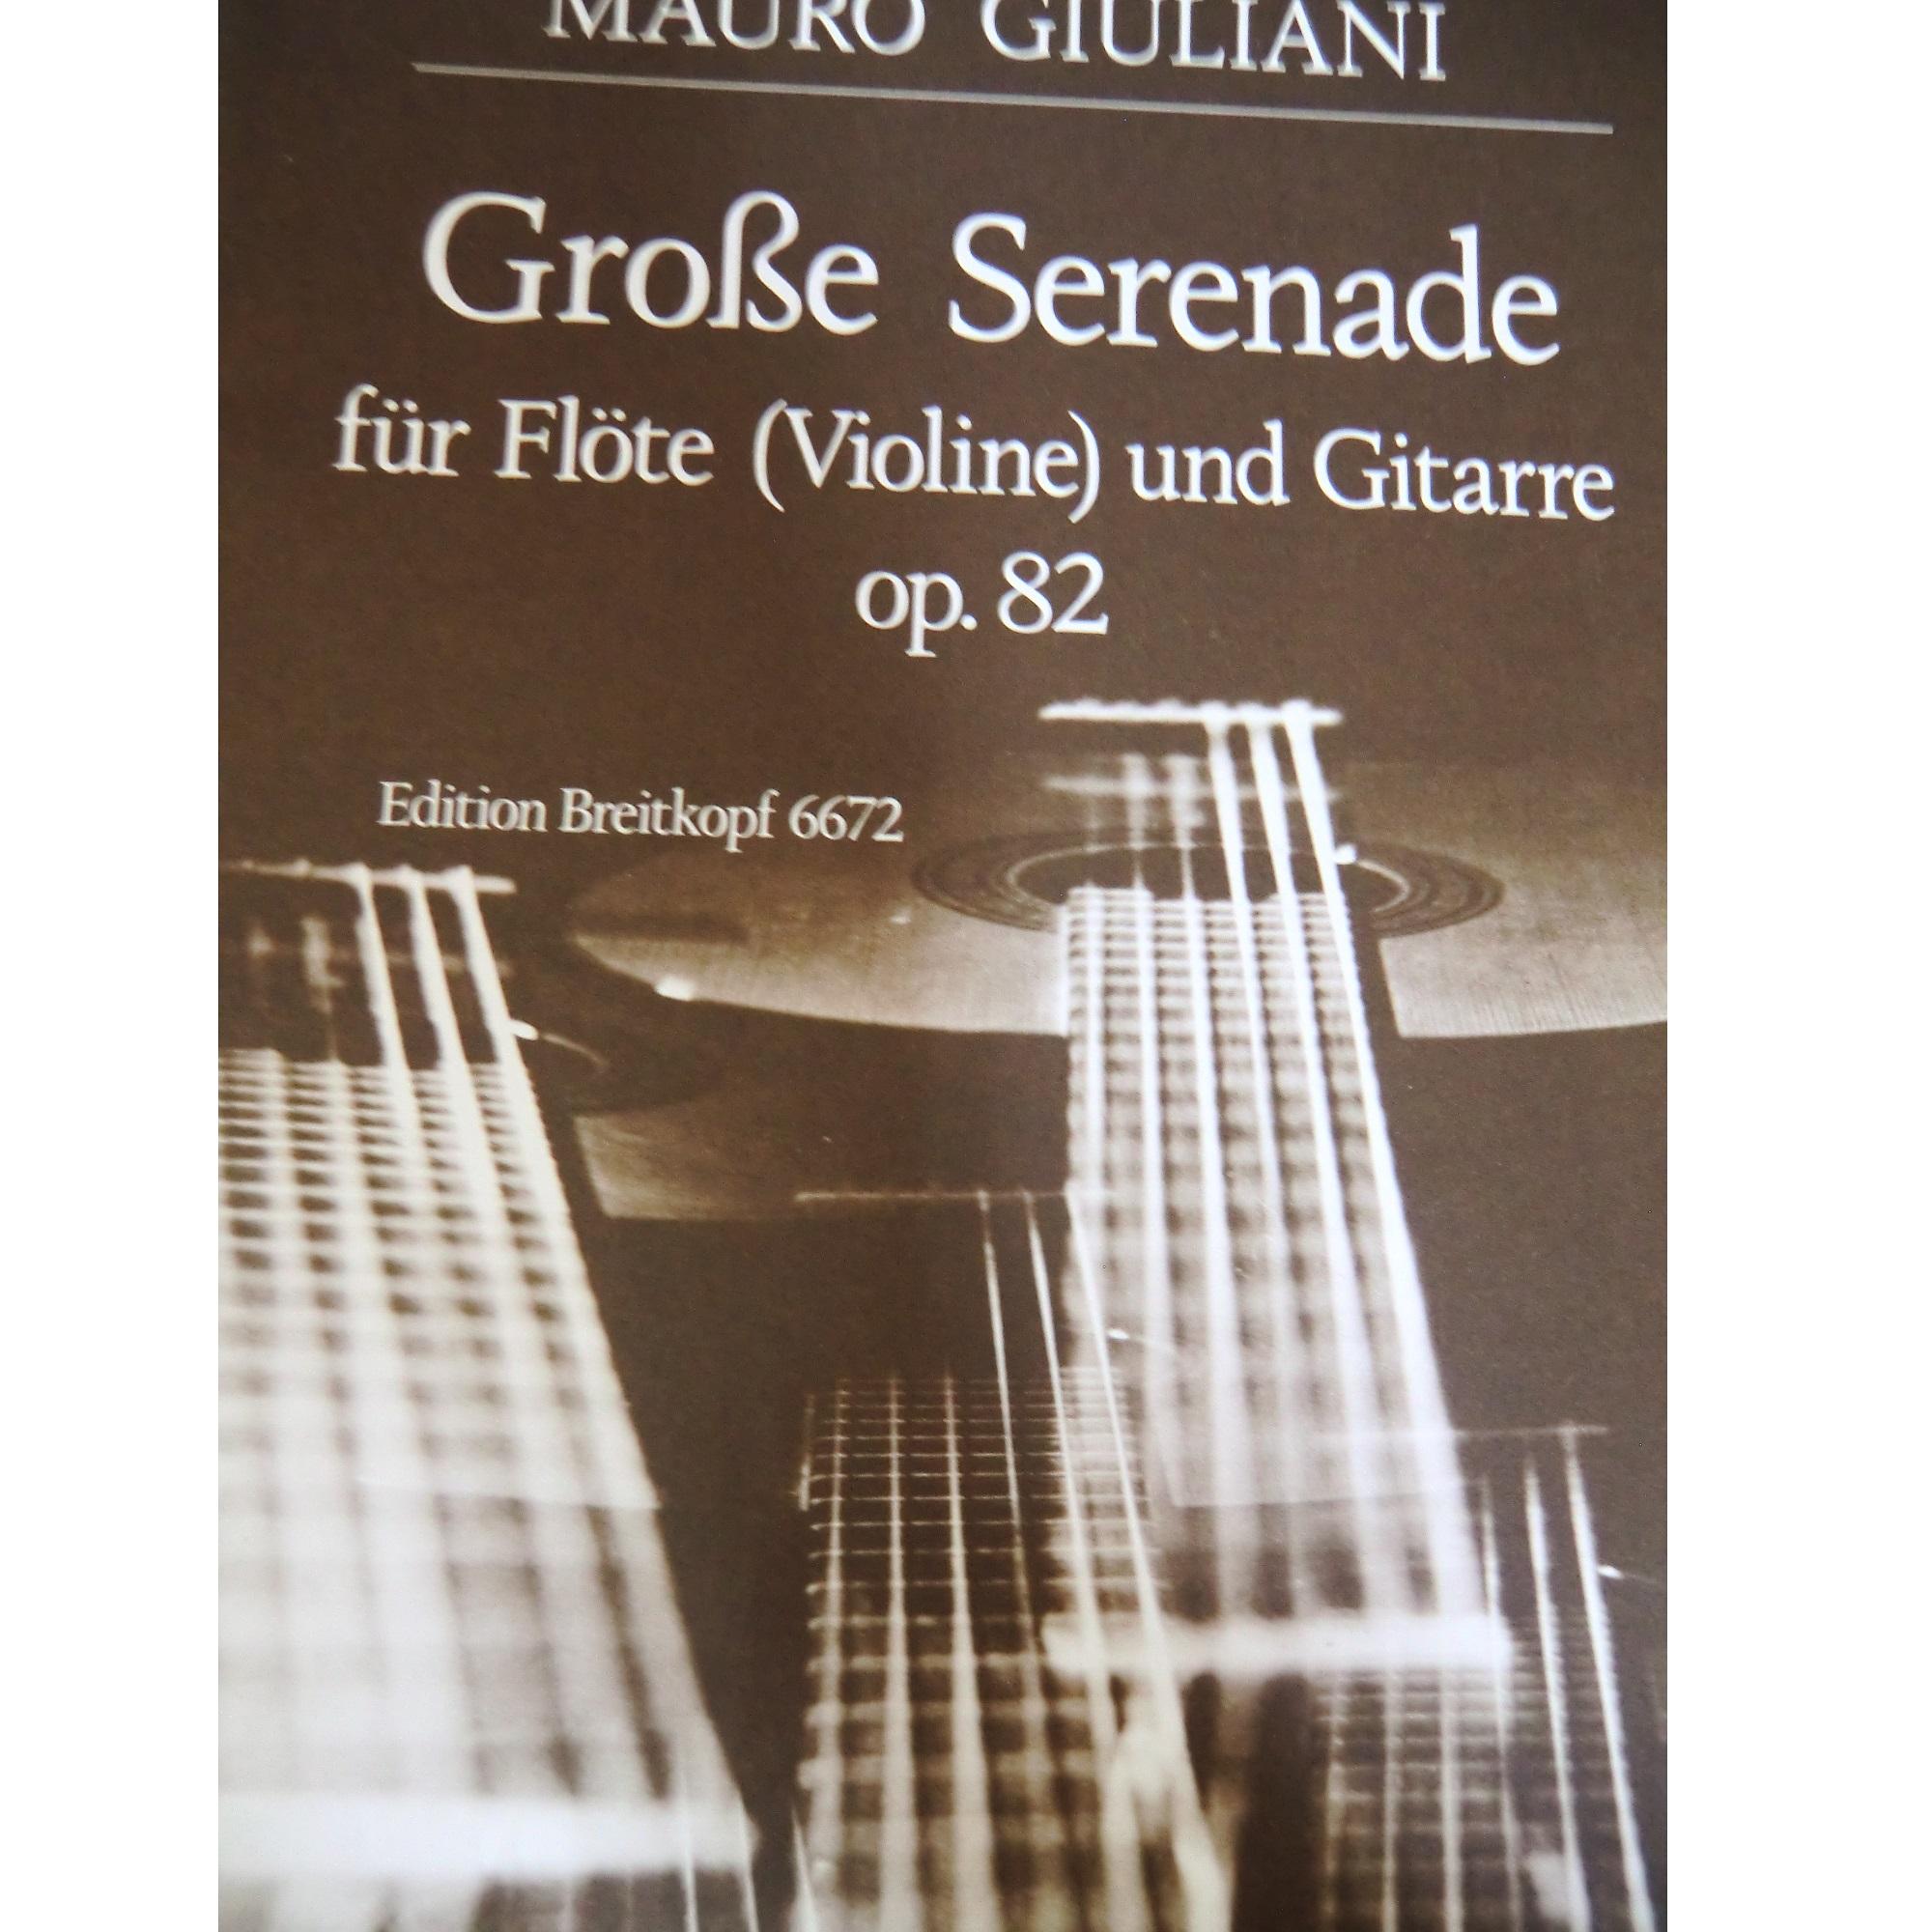 Giuliani Grobe Serenade fur Flote (Violine) und Gitarre Op. 82 - Edition Breitkopf 6672